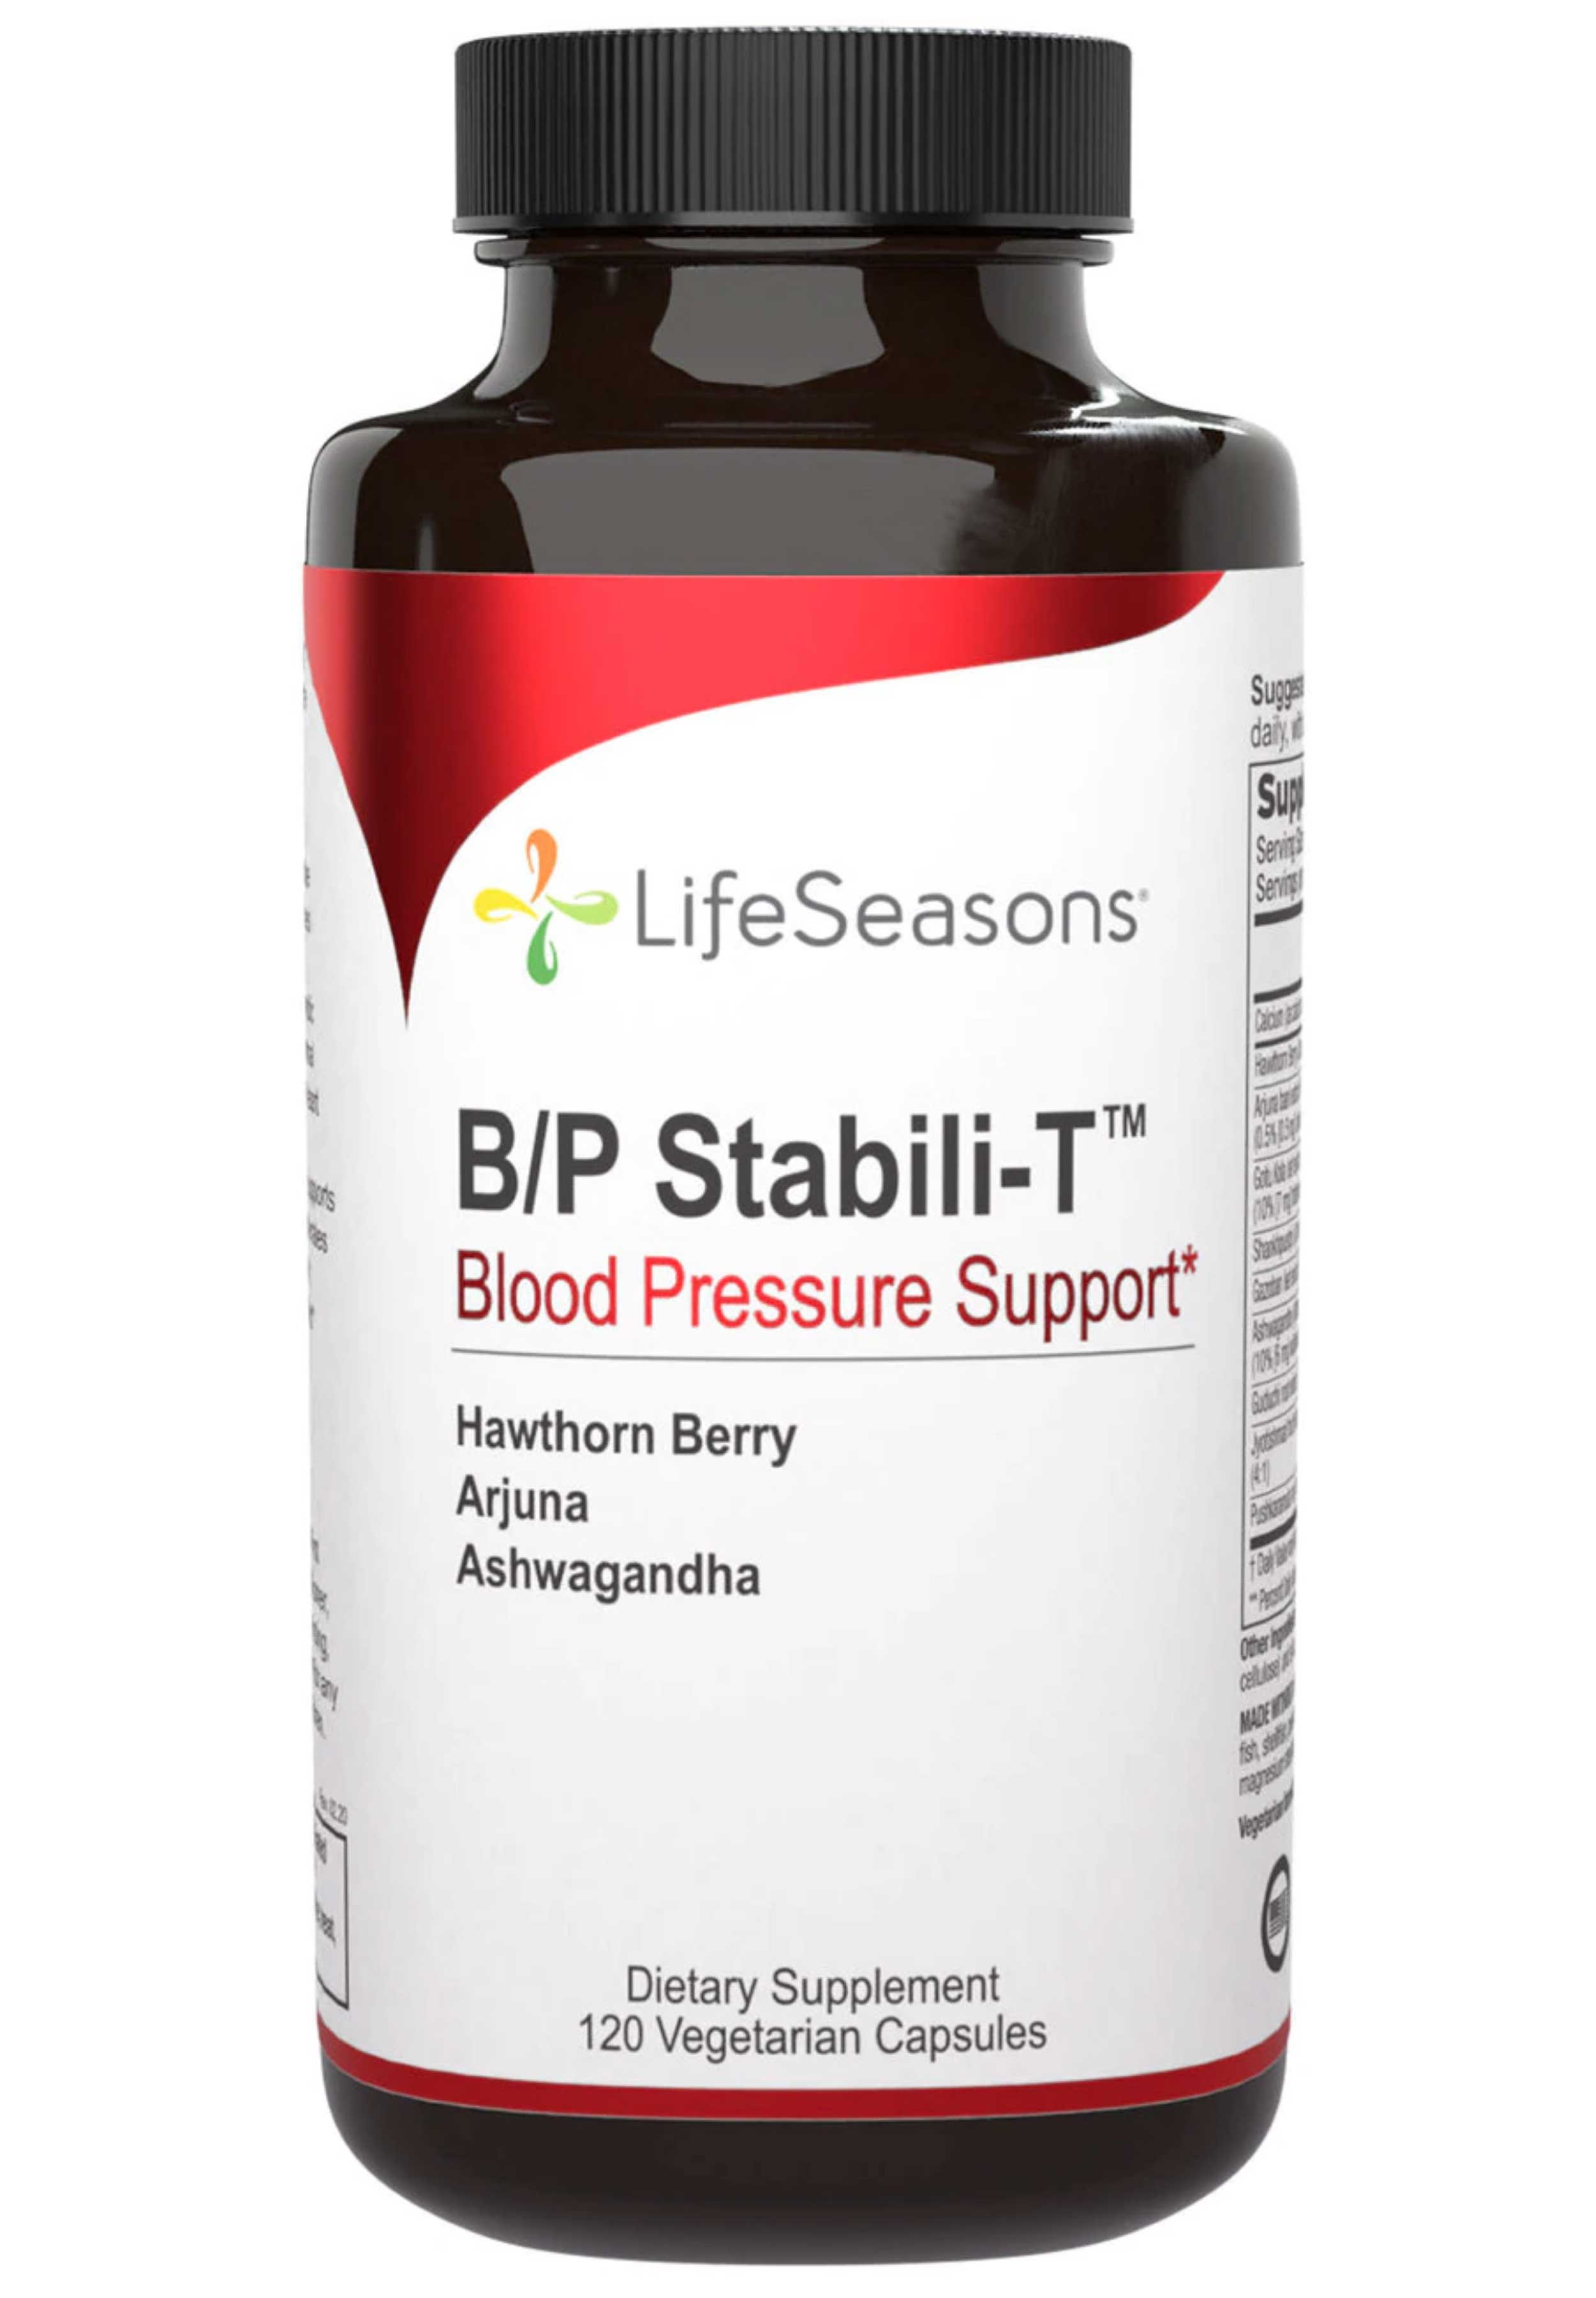 LifeSeasons B/P Stabili-T